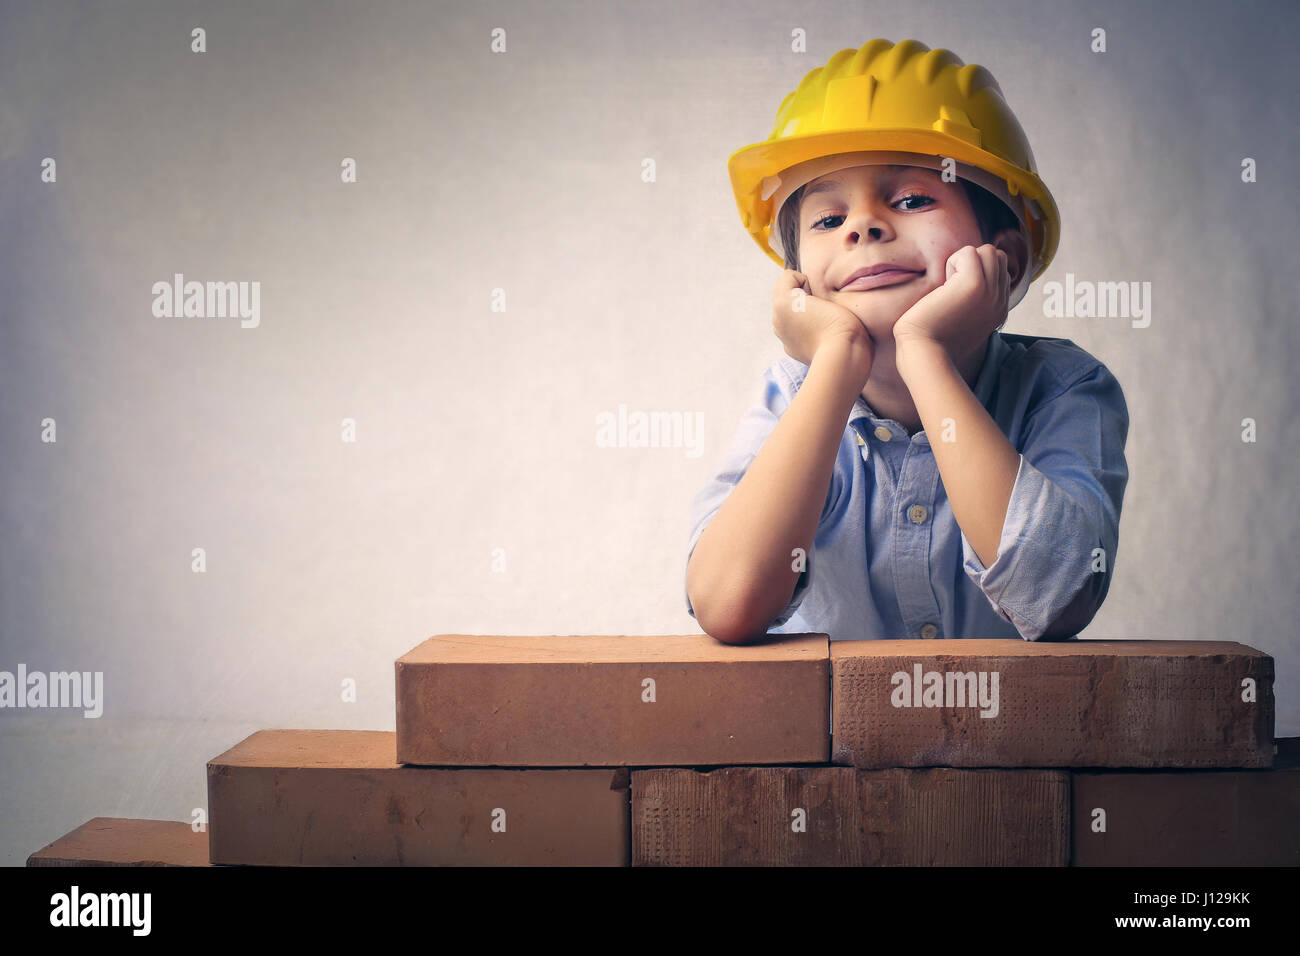 Boy construction worker with bricks Stock Photo